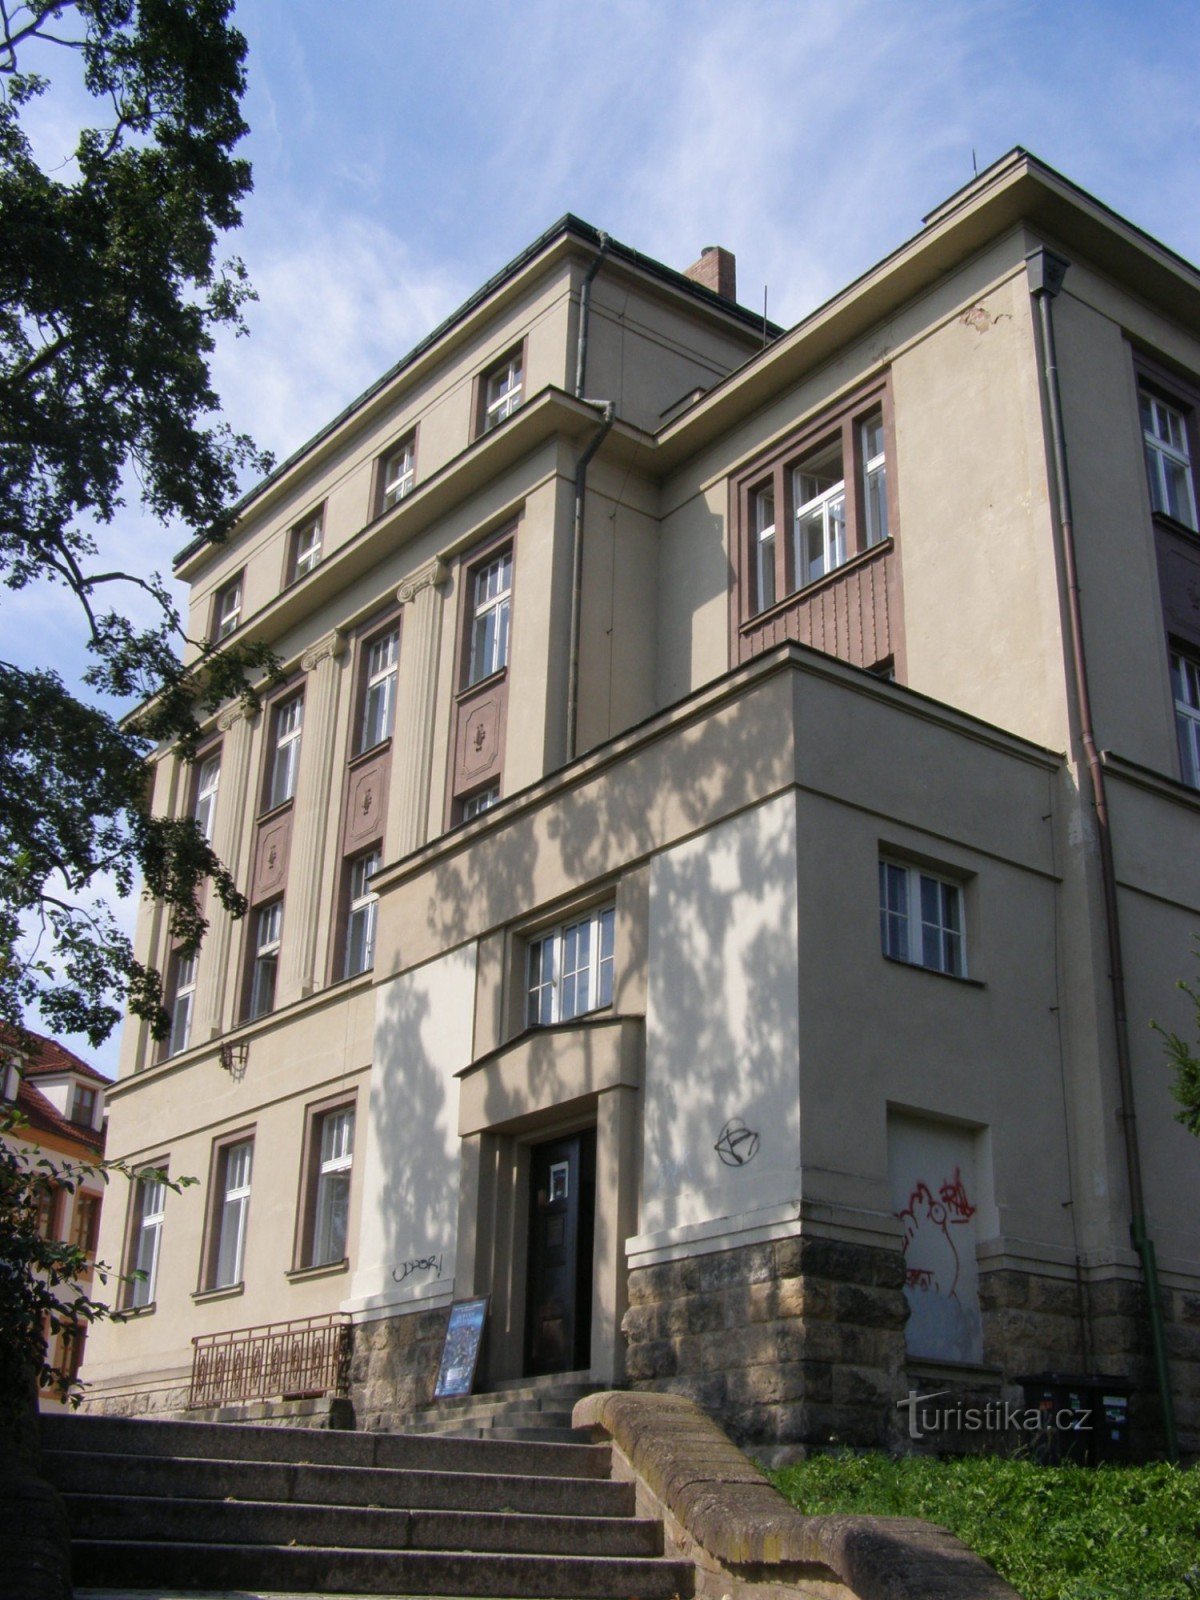 Hradec Králové - Husův dům - Rokytanin näyttelyhalli